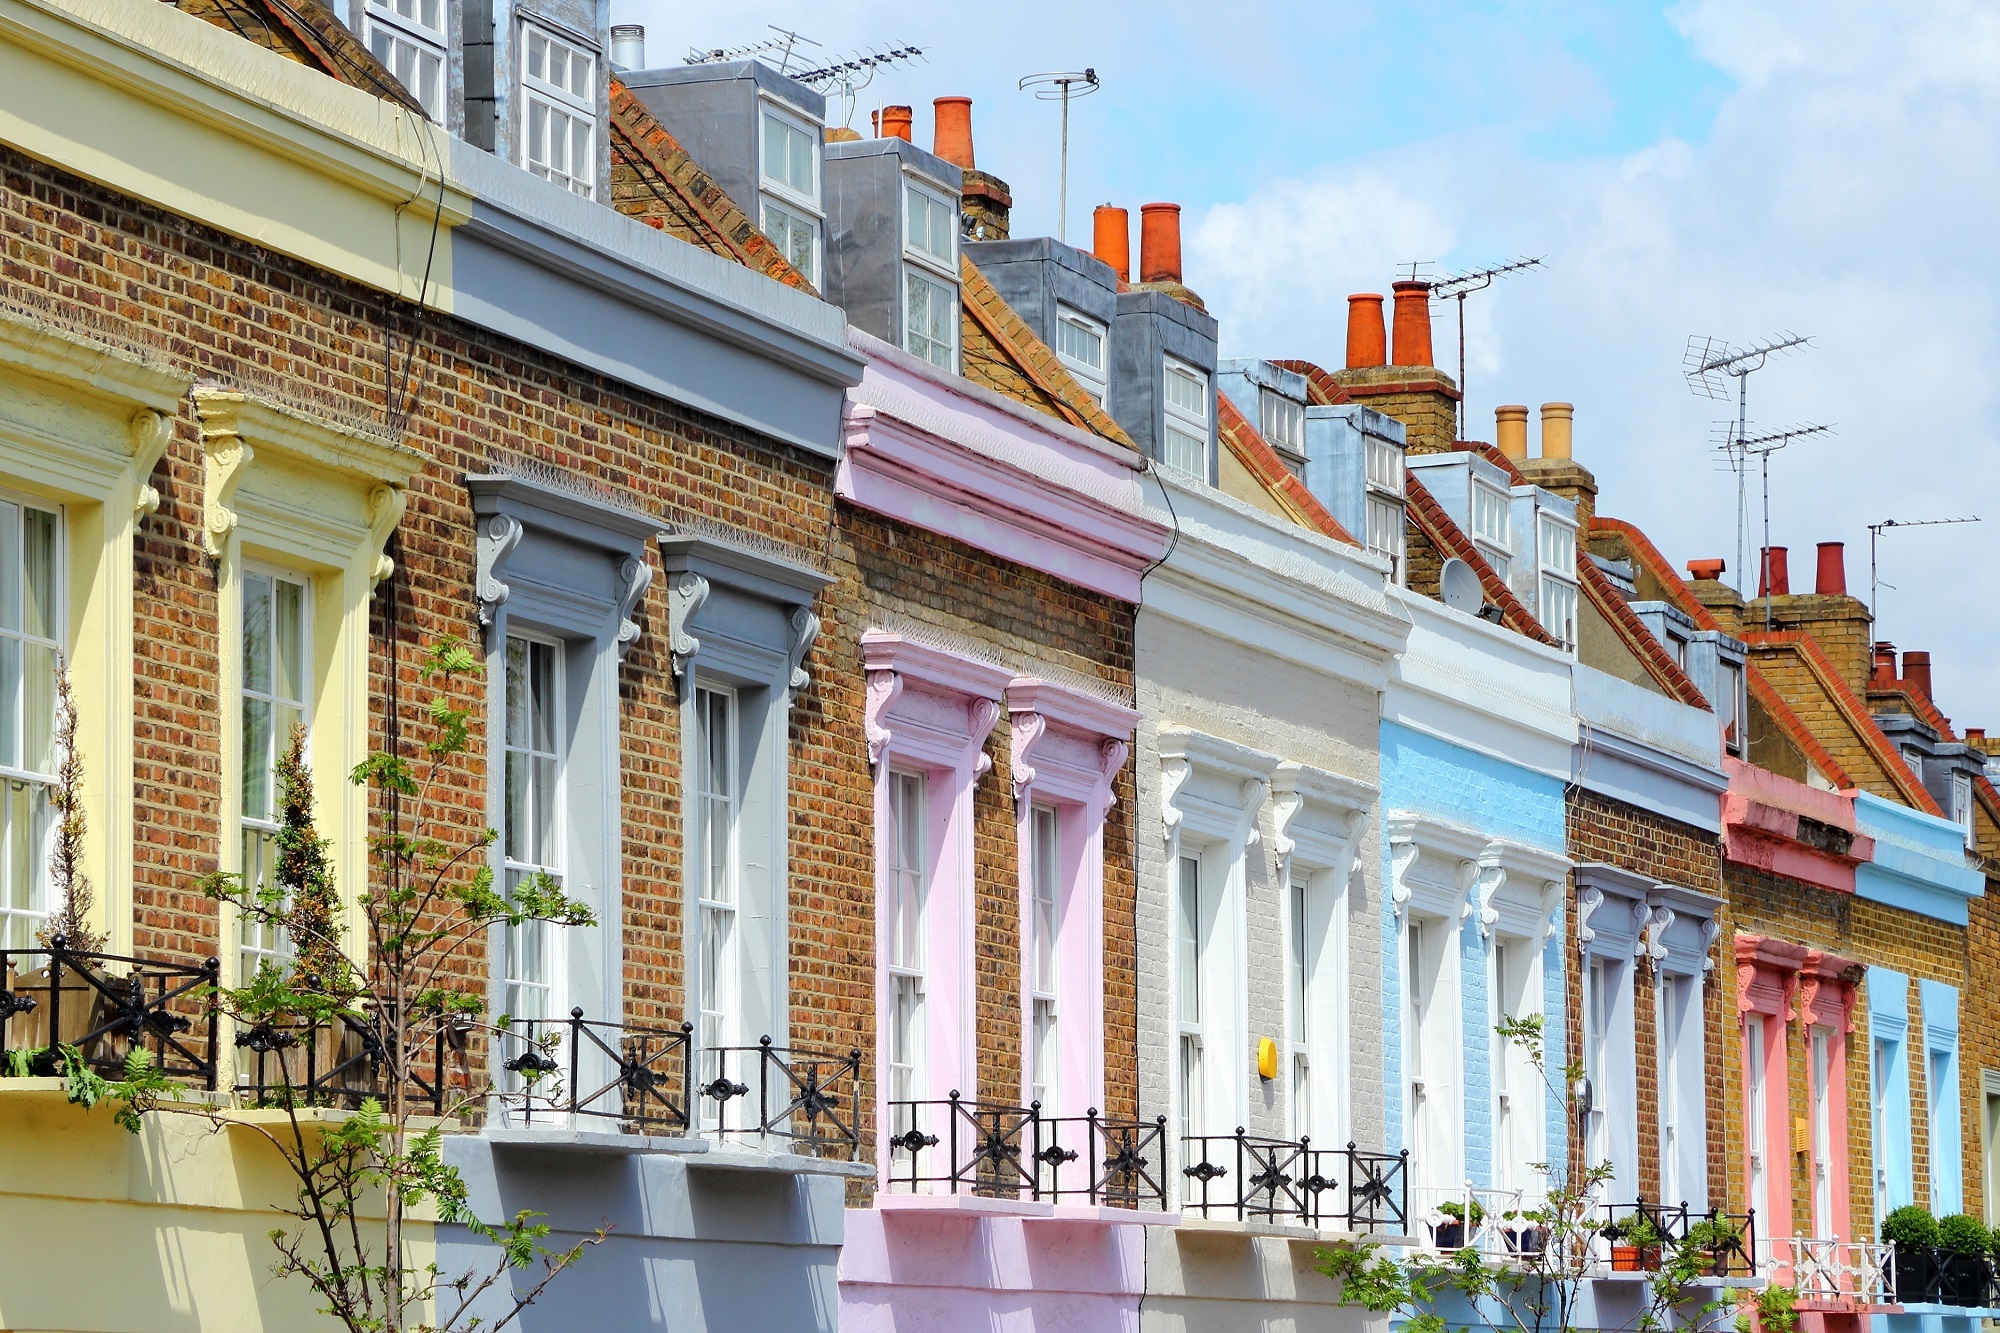 Coloured London houses